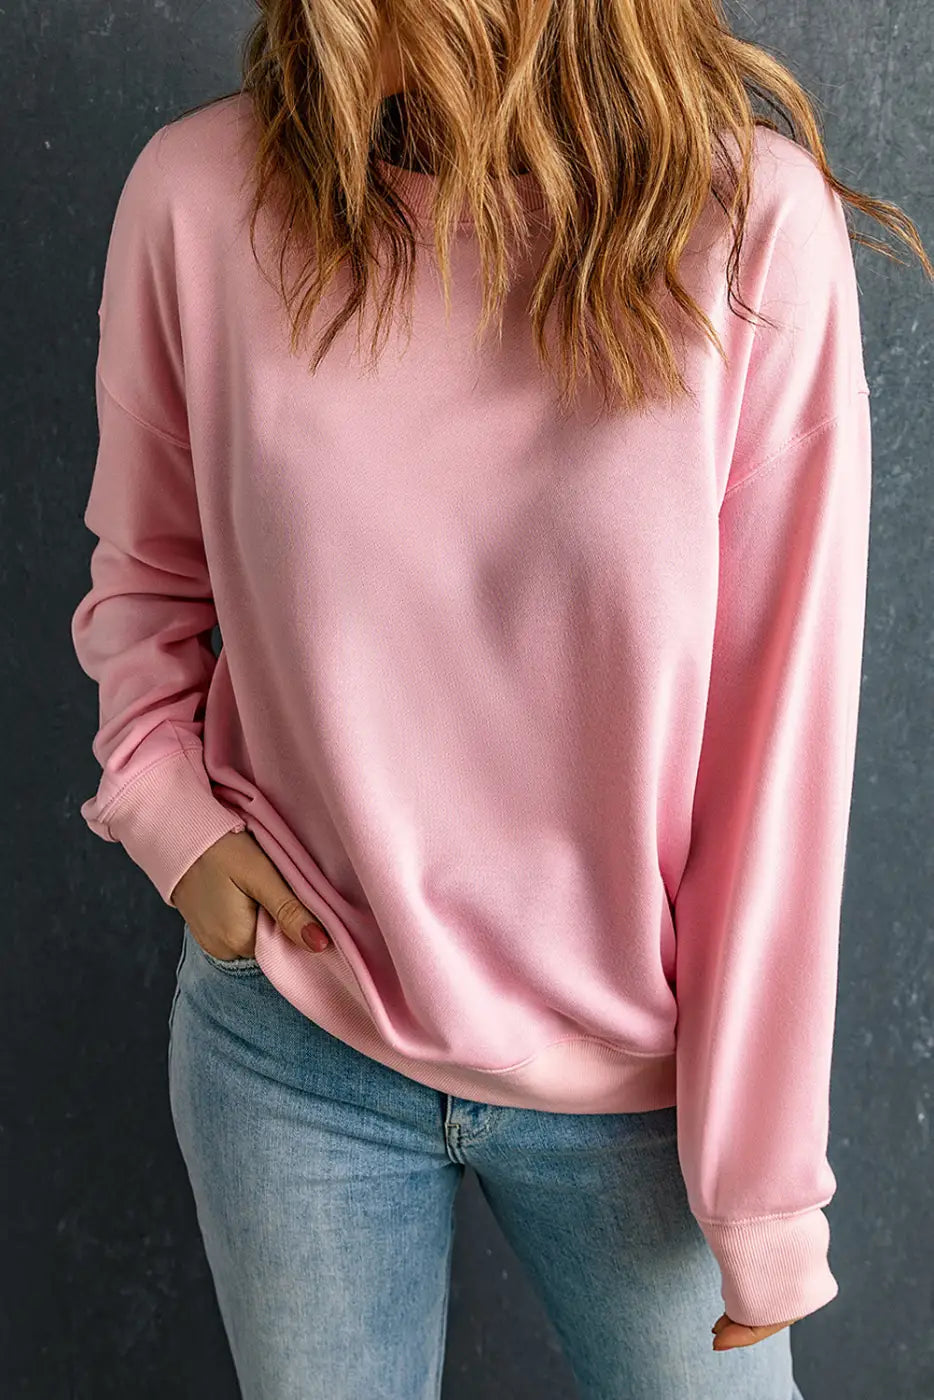 Vintage vibe sweatshirt - pink / s / 50% polyester + 50% cotton - sweatshirts